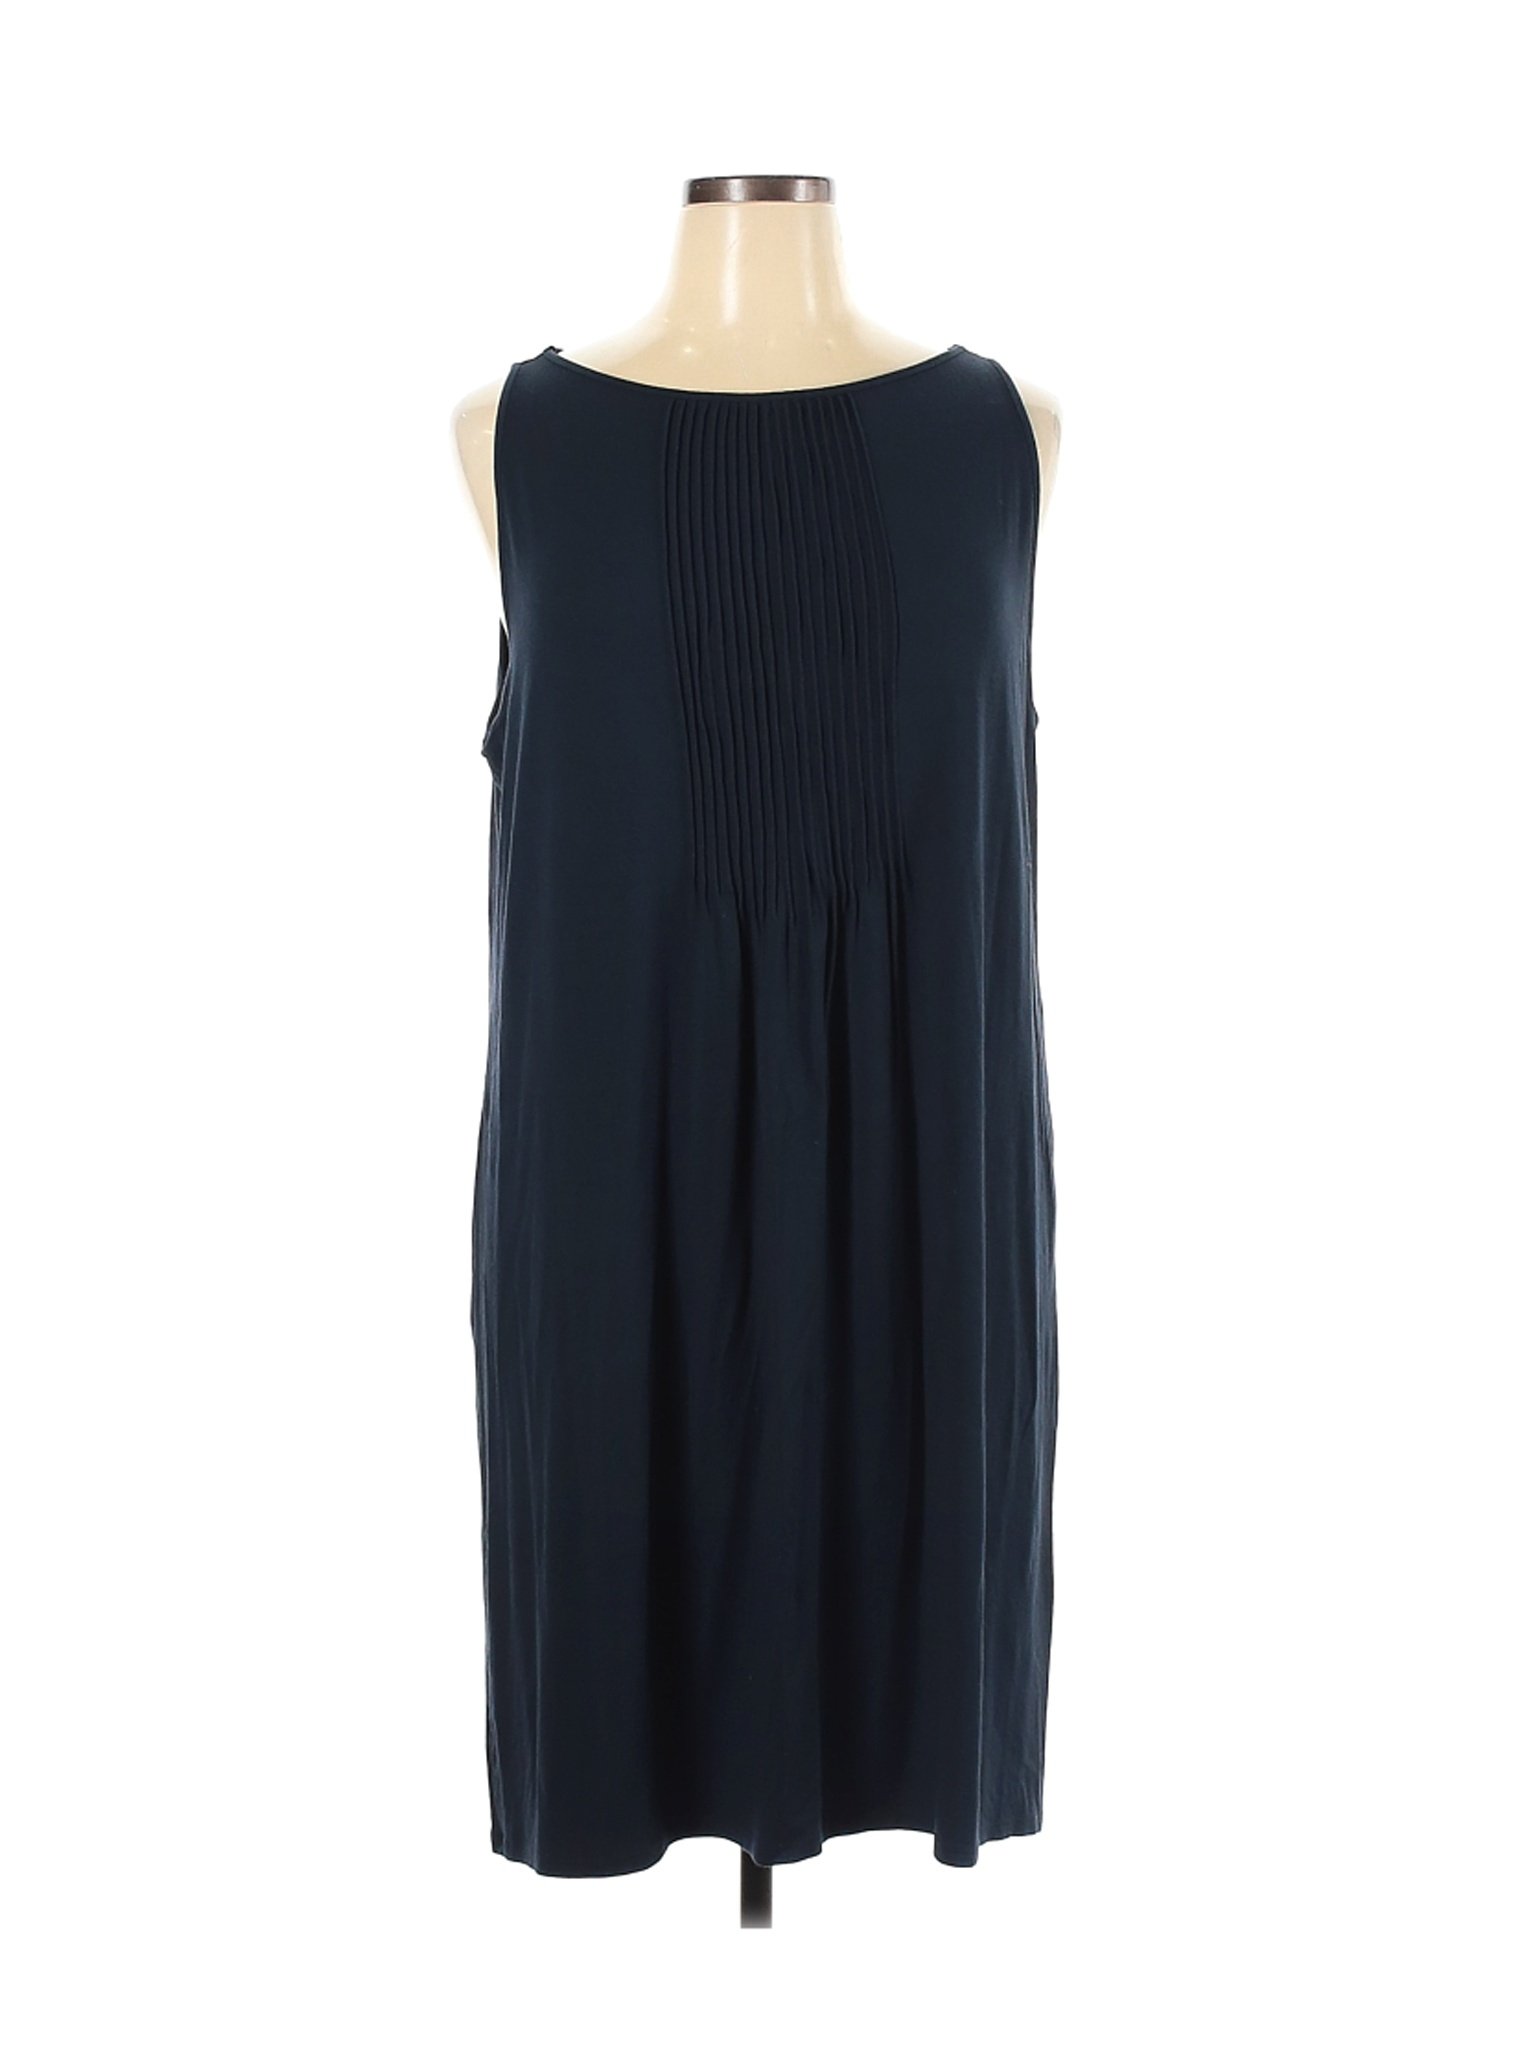 J.Jill Women Black Casual Dress XL | eBay